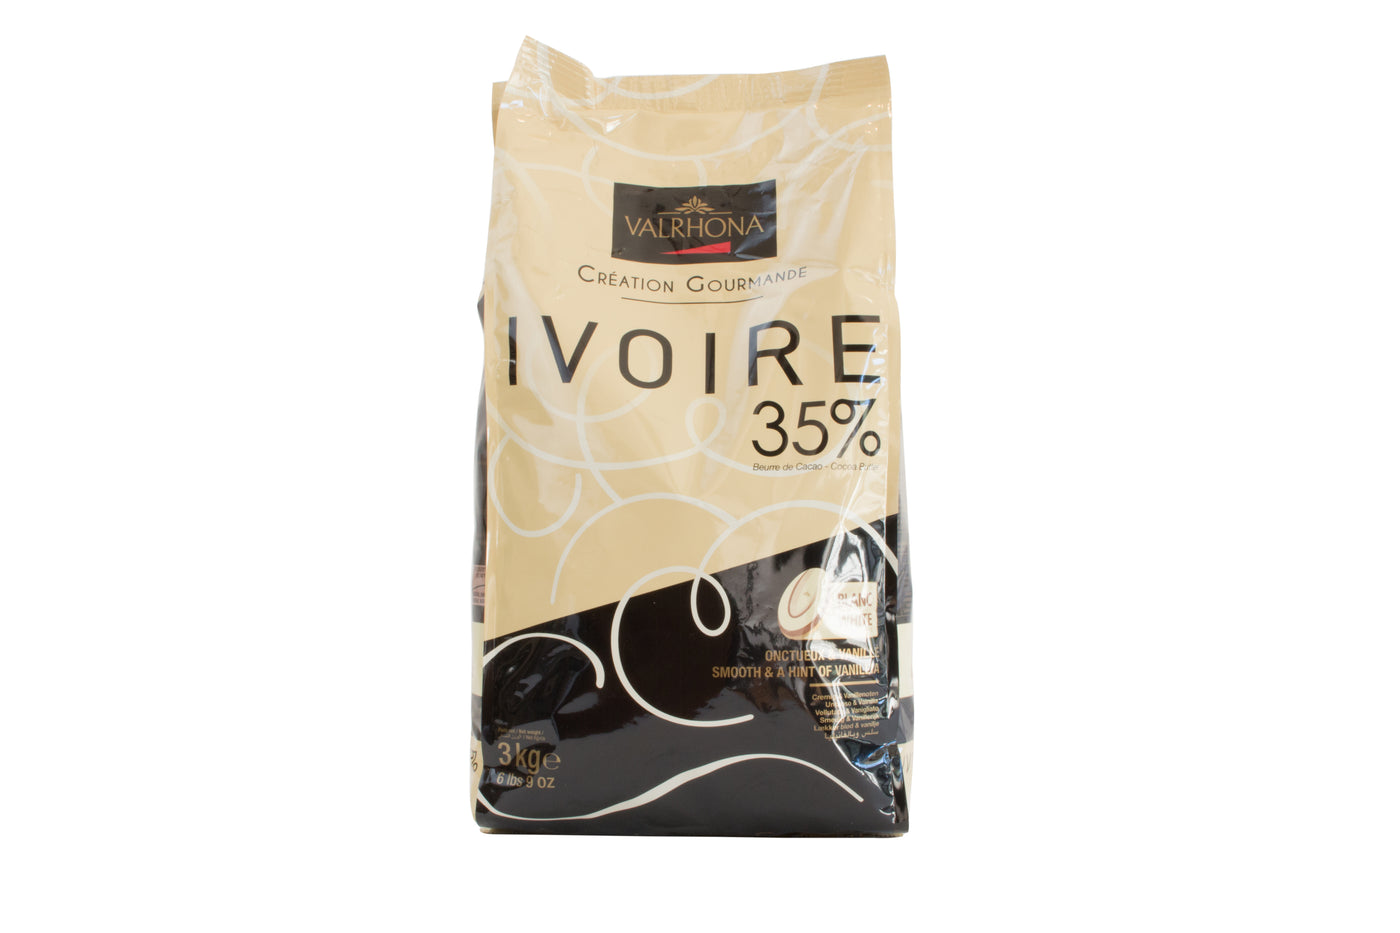  Valrhona White Chocolate Couverture Ivoire 35% Cocoa